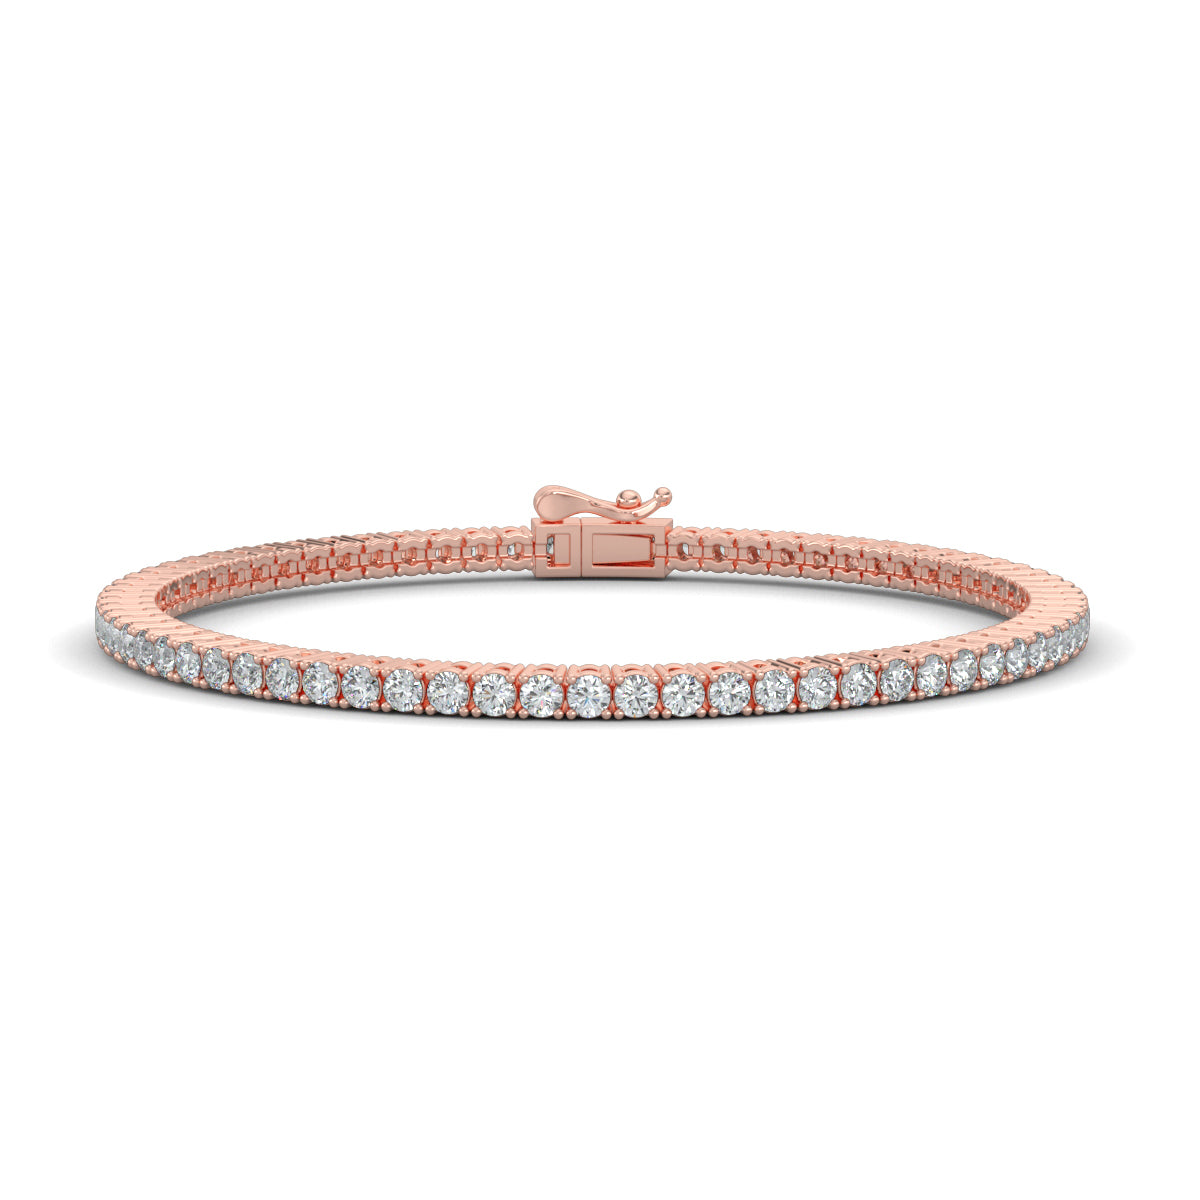 Rose Gold, Diamond Bracelet, Natural diamond bracelet, Lab-grown diamond bracelet, 8-Pointer Tennis Bracelet, tennis bracelet, prong setting, jewelry